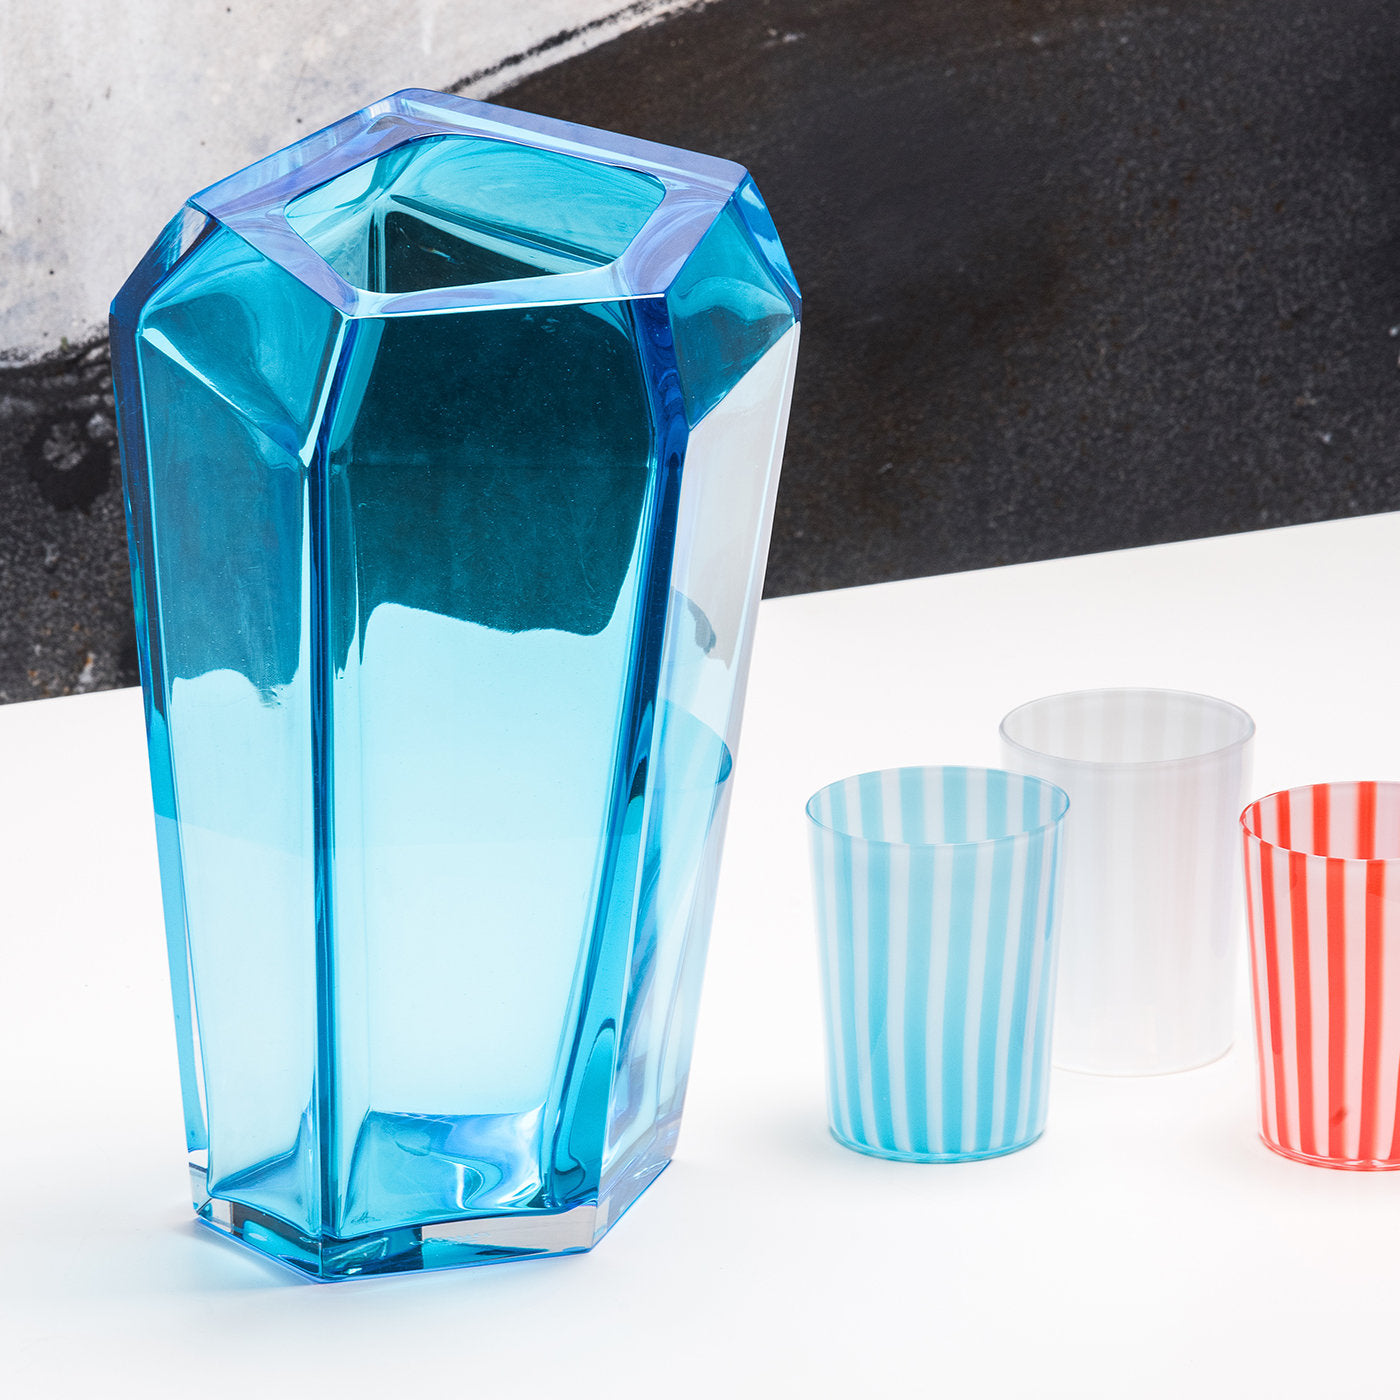 Kastle Blue Vase by Karim Rashid - Alternative view 1